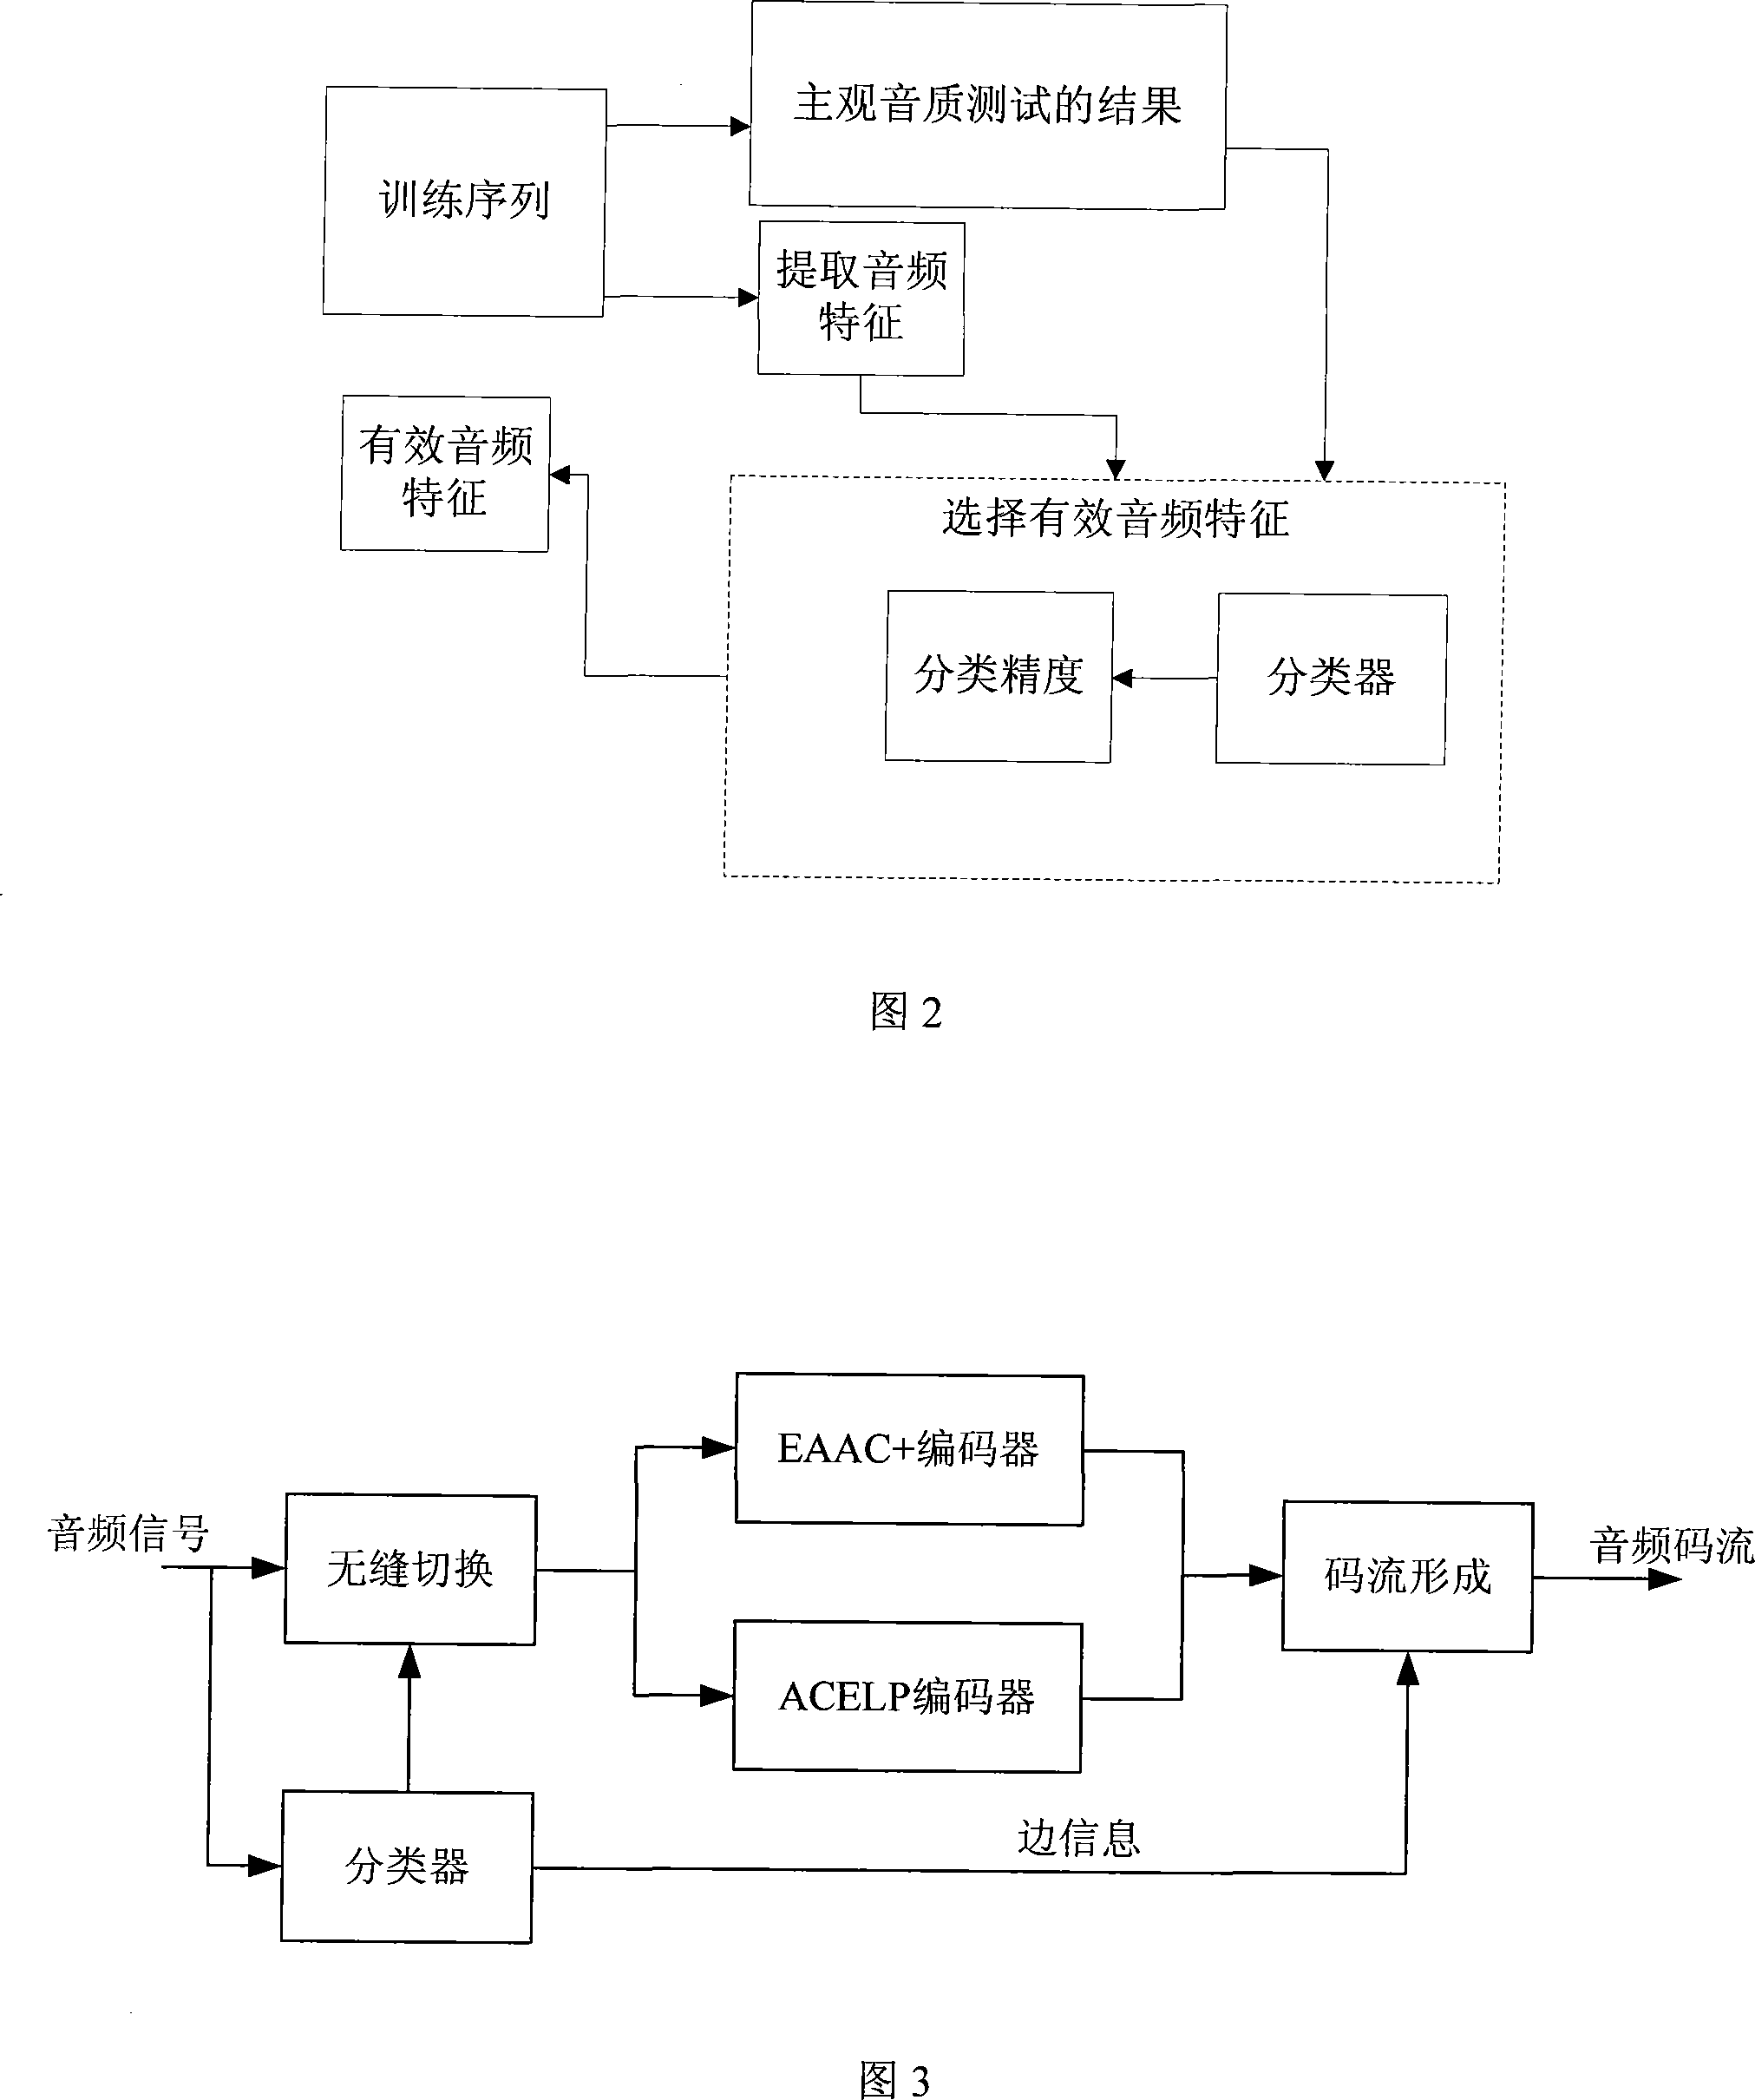 Method for switching audio encoder